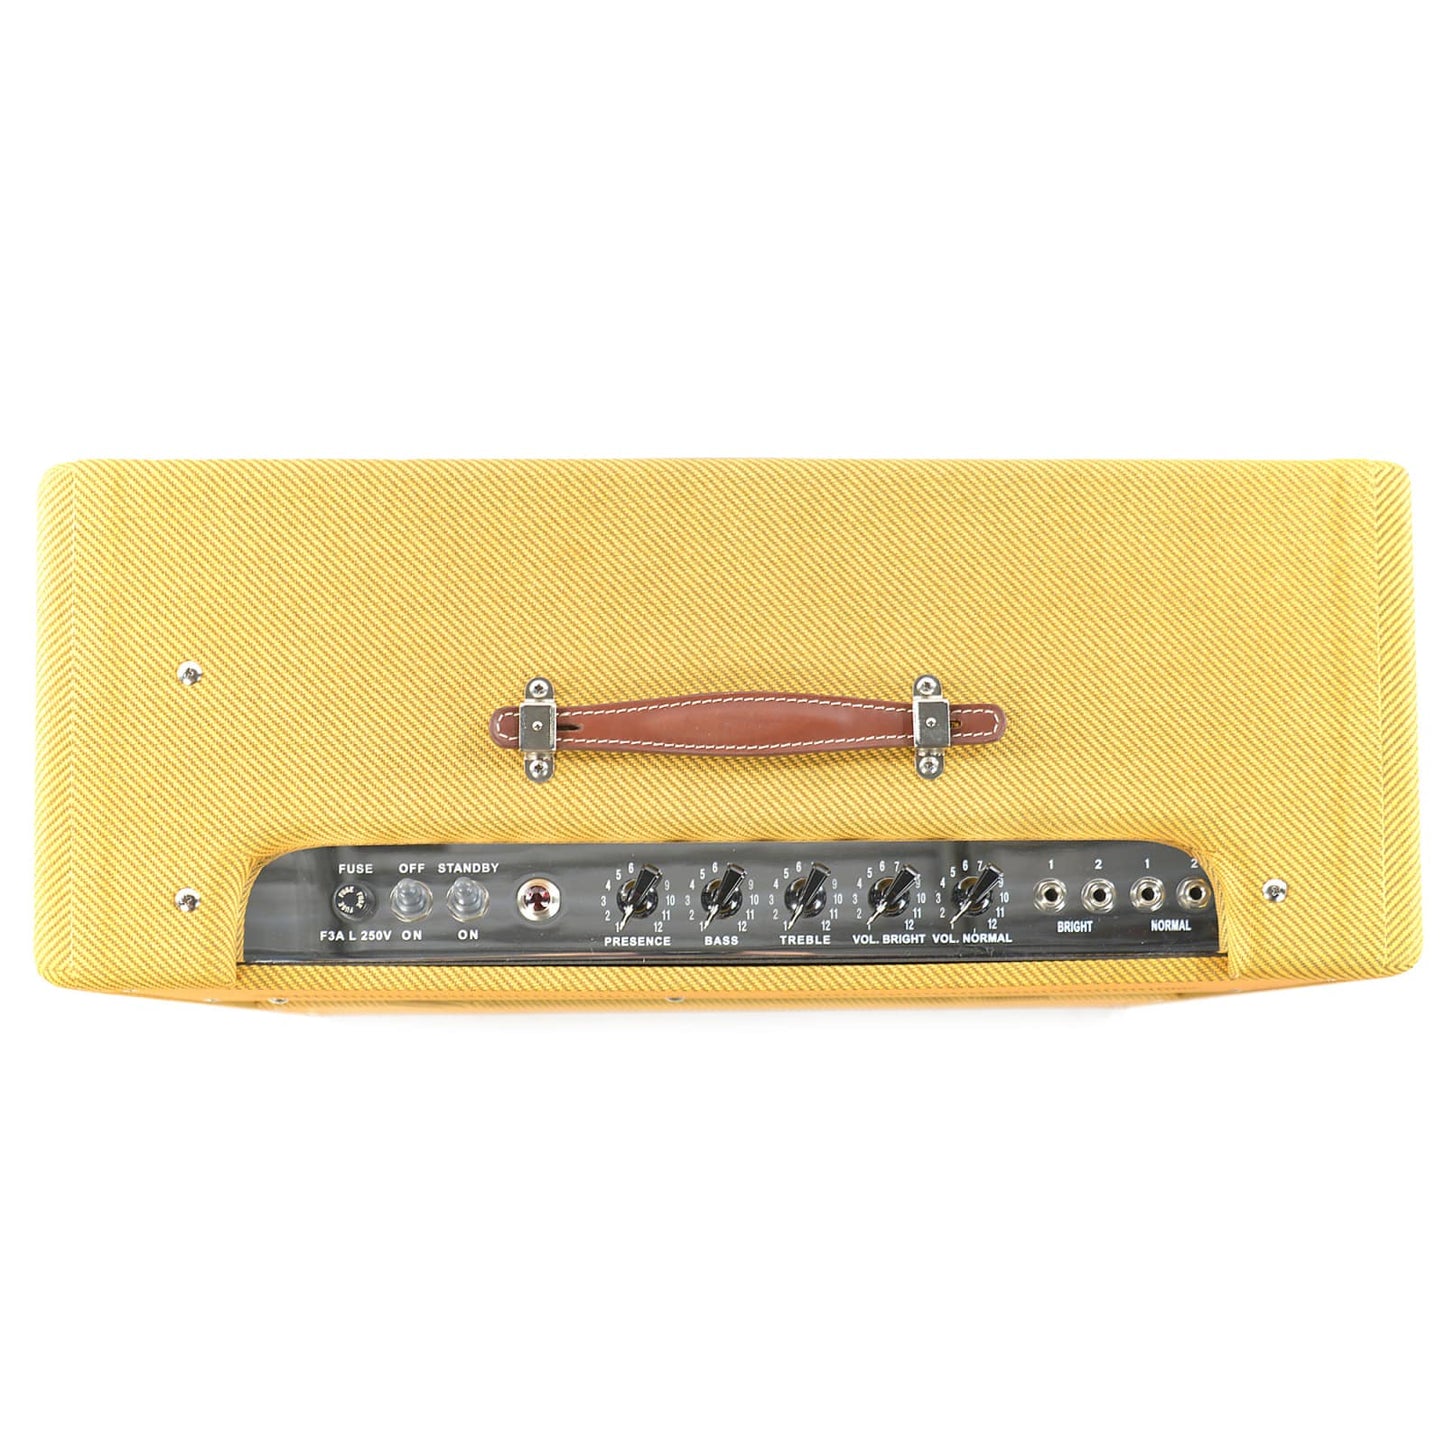 Fender '57 Tweed Custom Twin-Amp 40W 2x12 Combo Amps / Guitar Combos